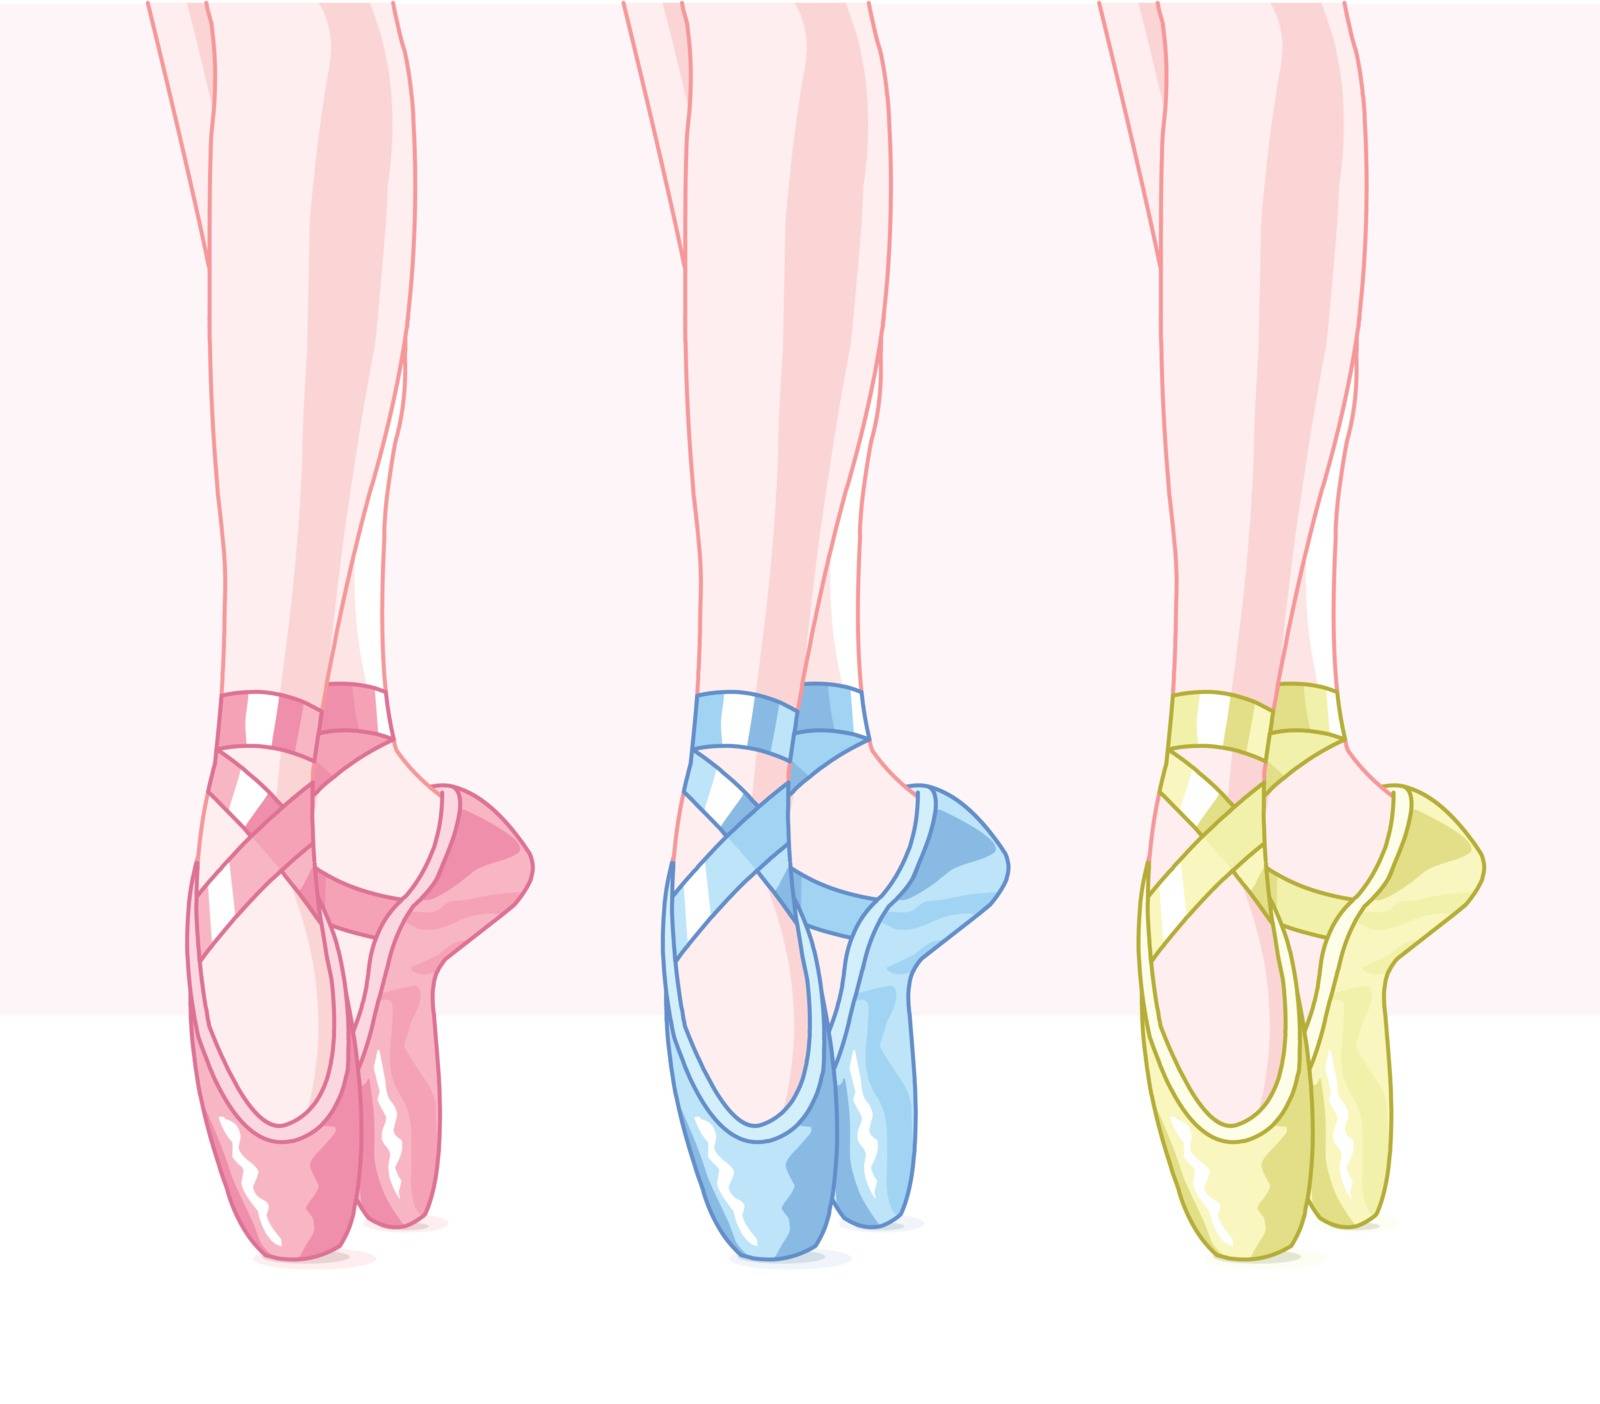 Ballet slippers by Dazdraperma